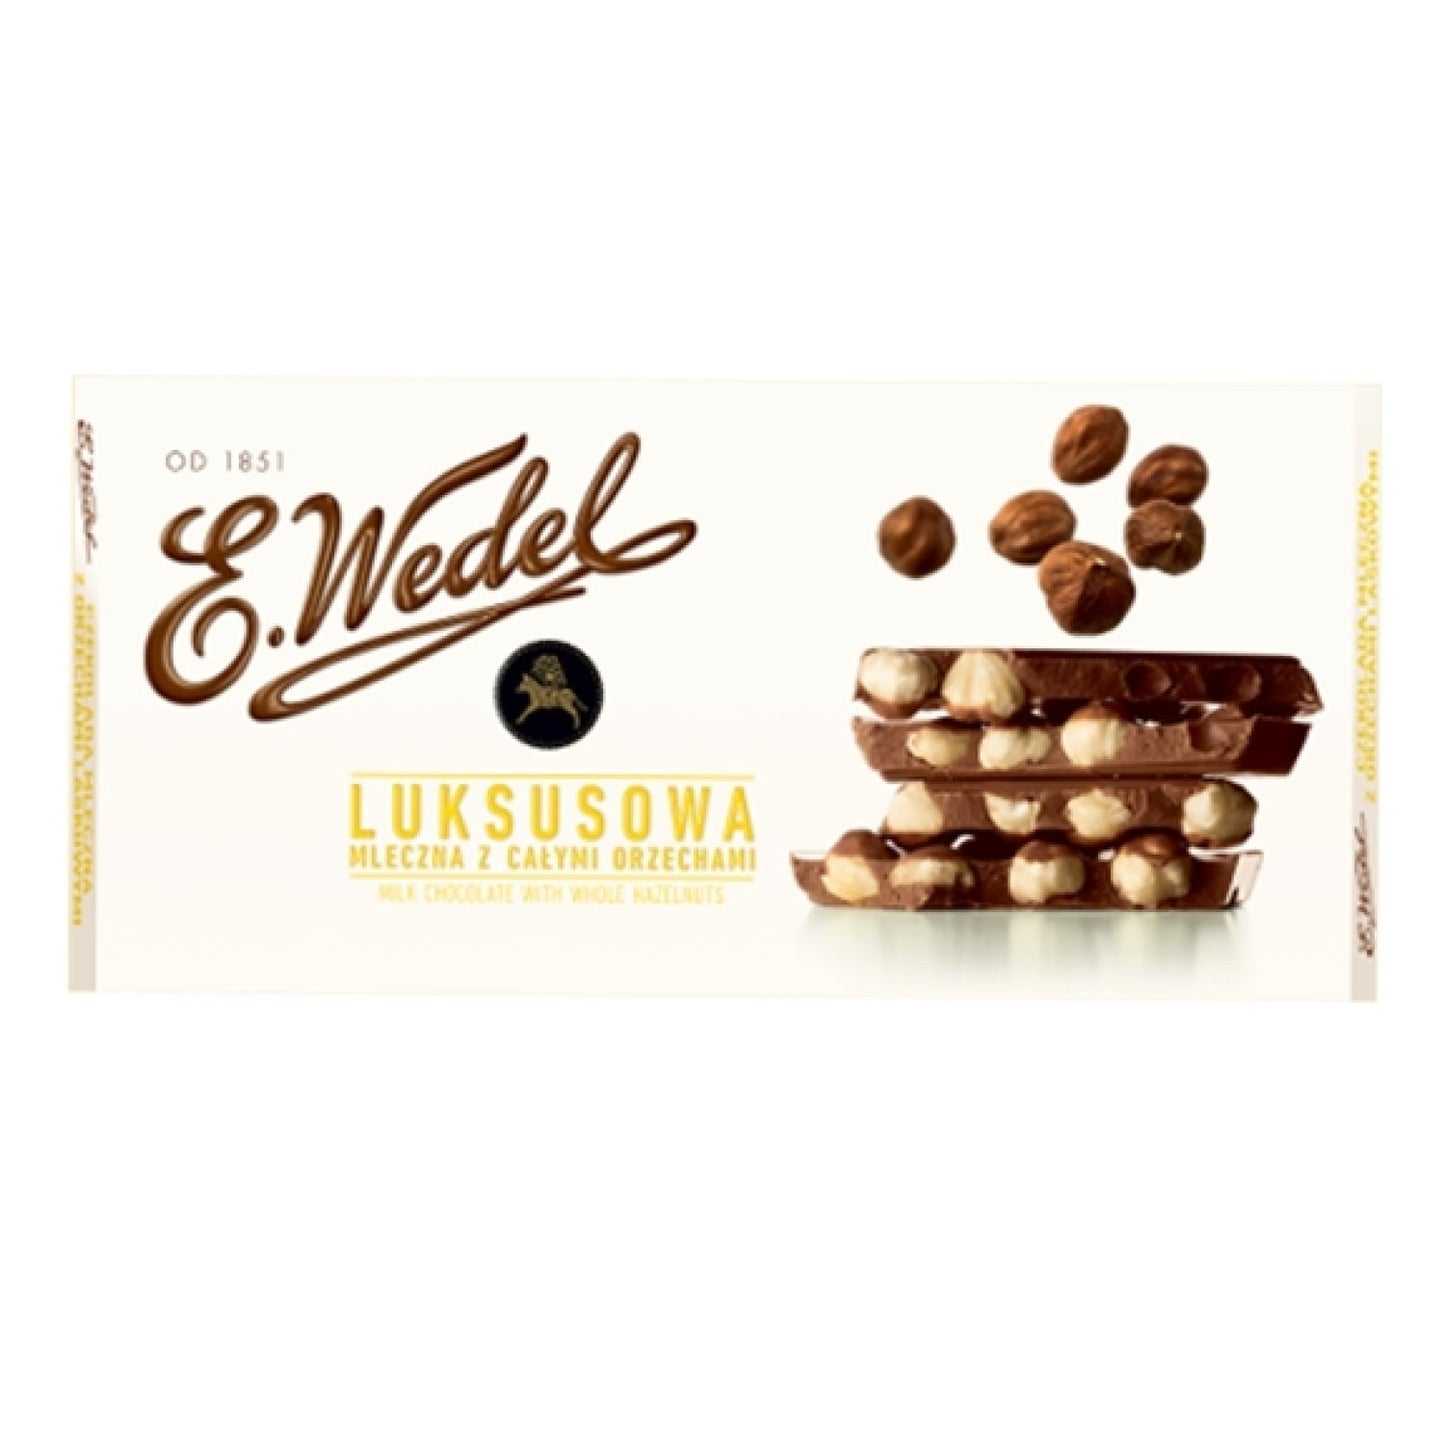 E.Wedel Milk Chocolate With Hazelnuts